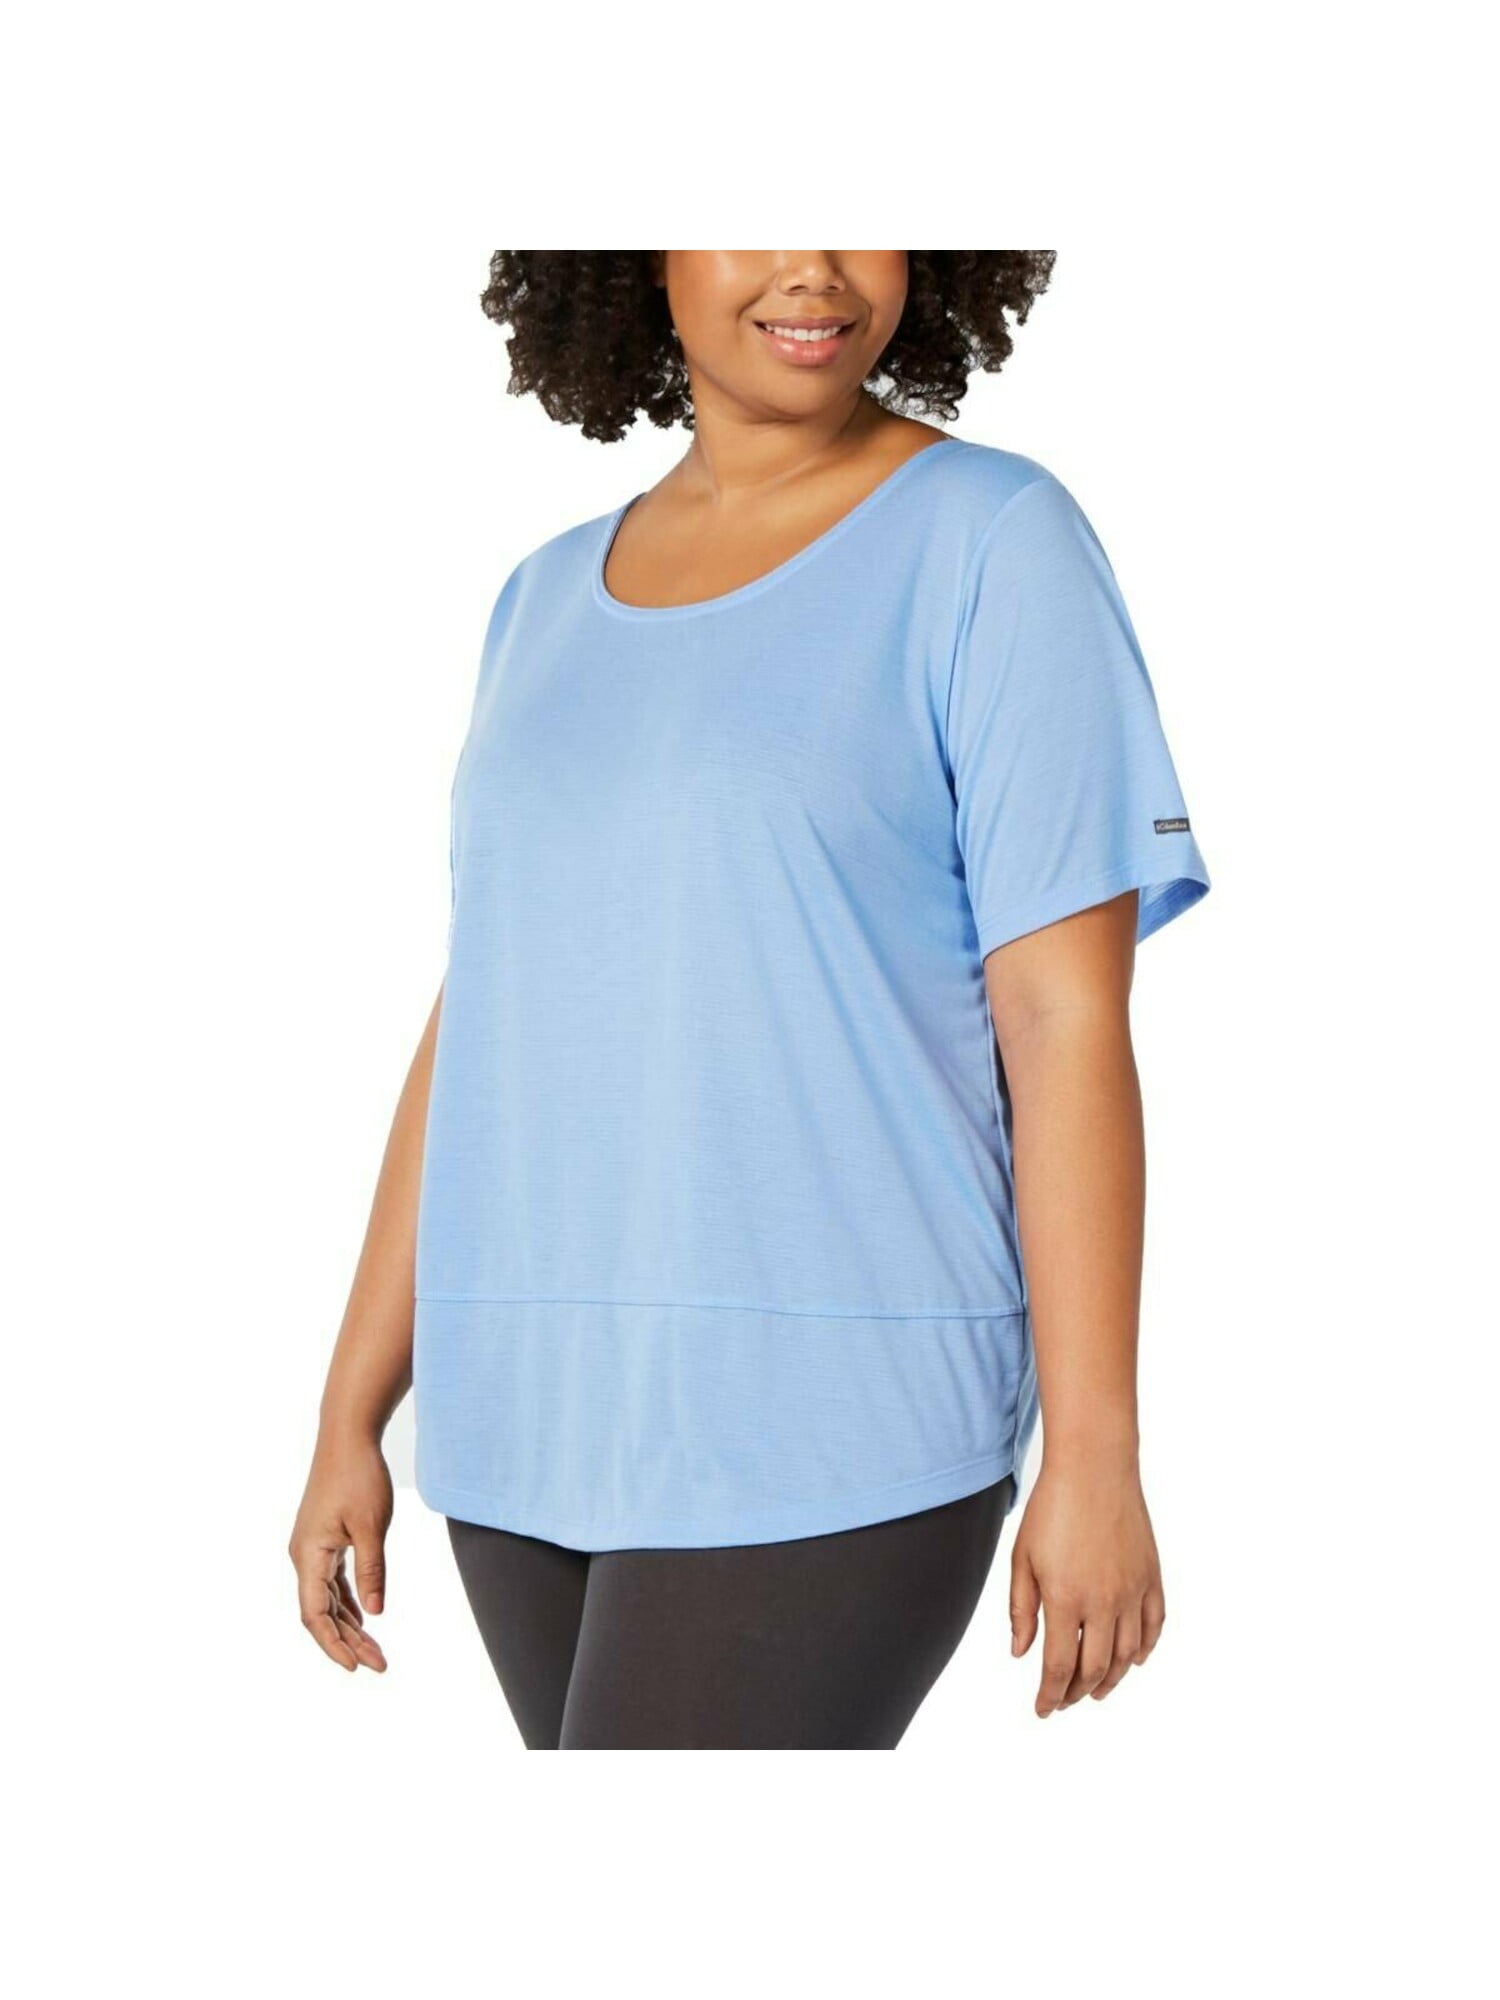 COLUMBIA Womens Light Blue Short Sleeve T-Shirt Active Wear Top Plus ...